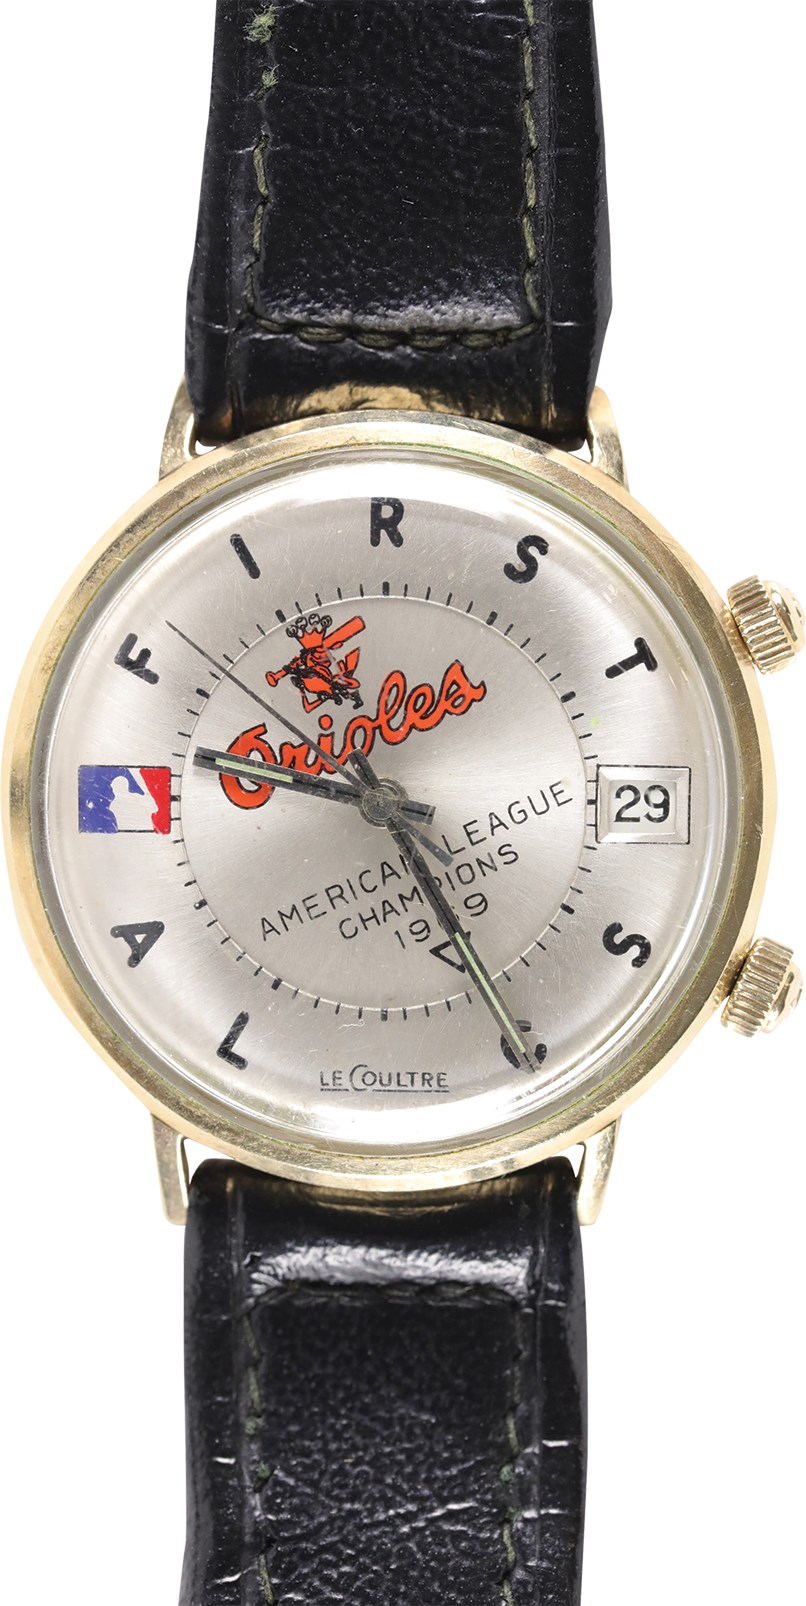 - 1969 Baltimore Orioles American League Champions Commemorative Watch